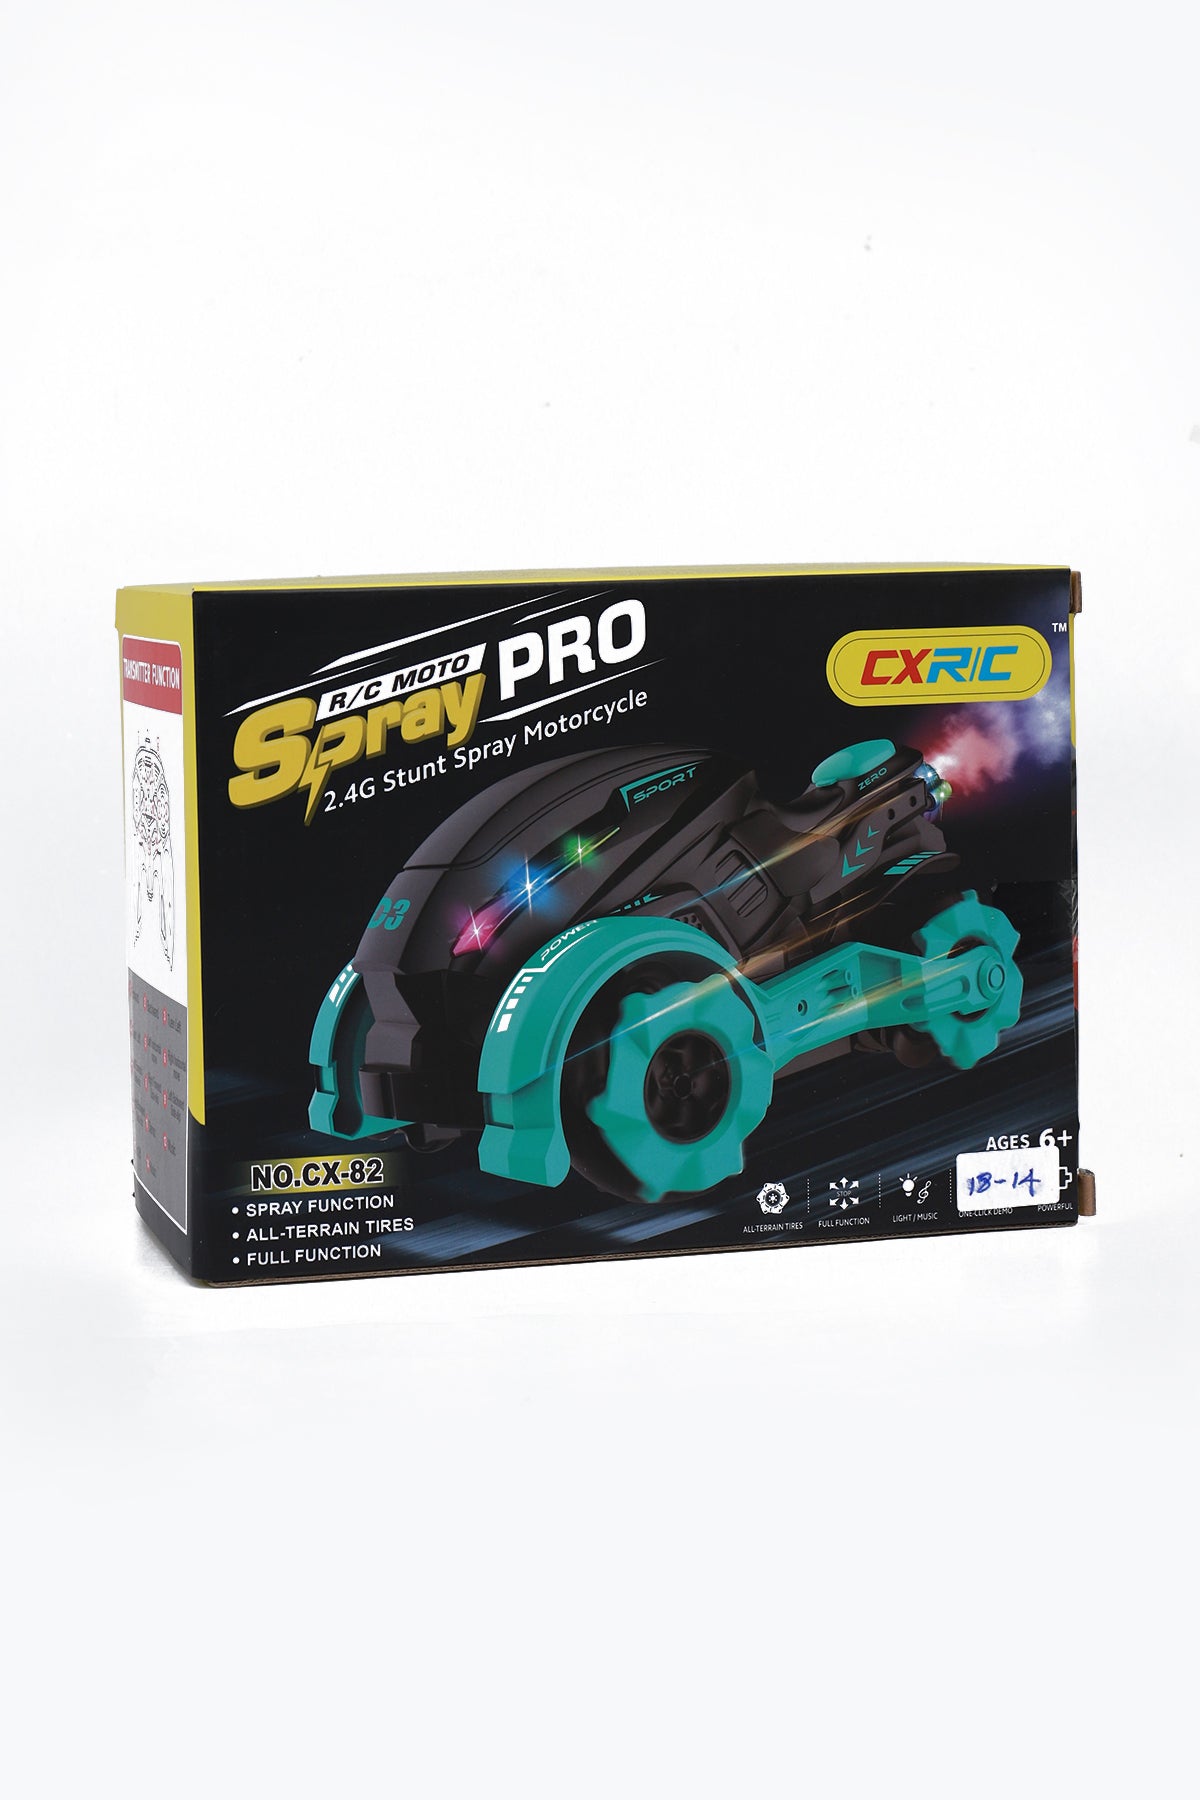 Stunt Spray Remote Control Motorcycle Toy